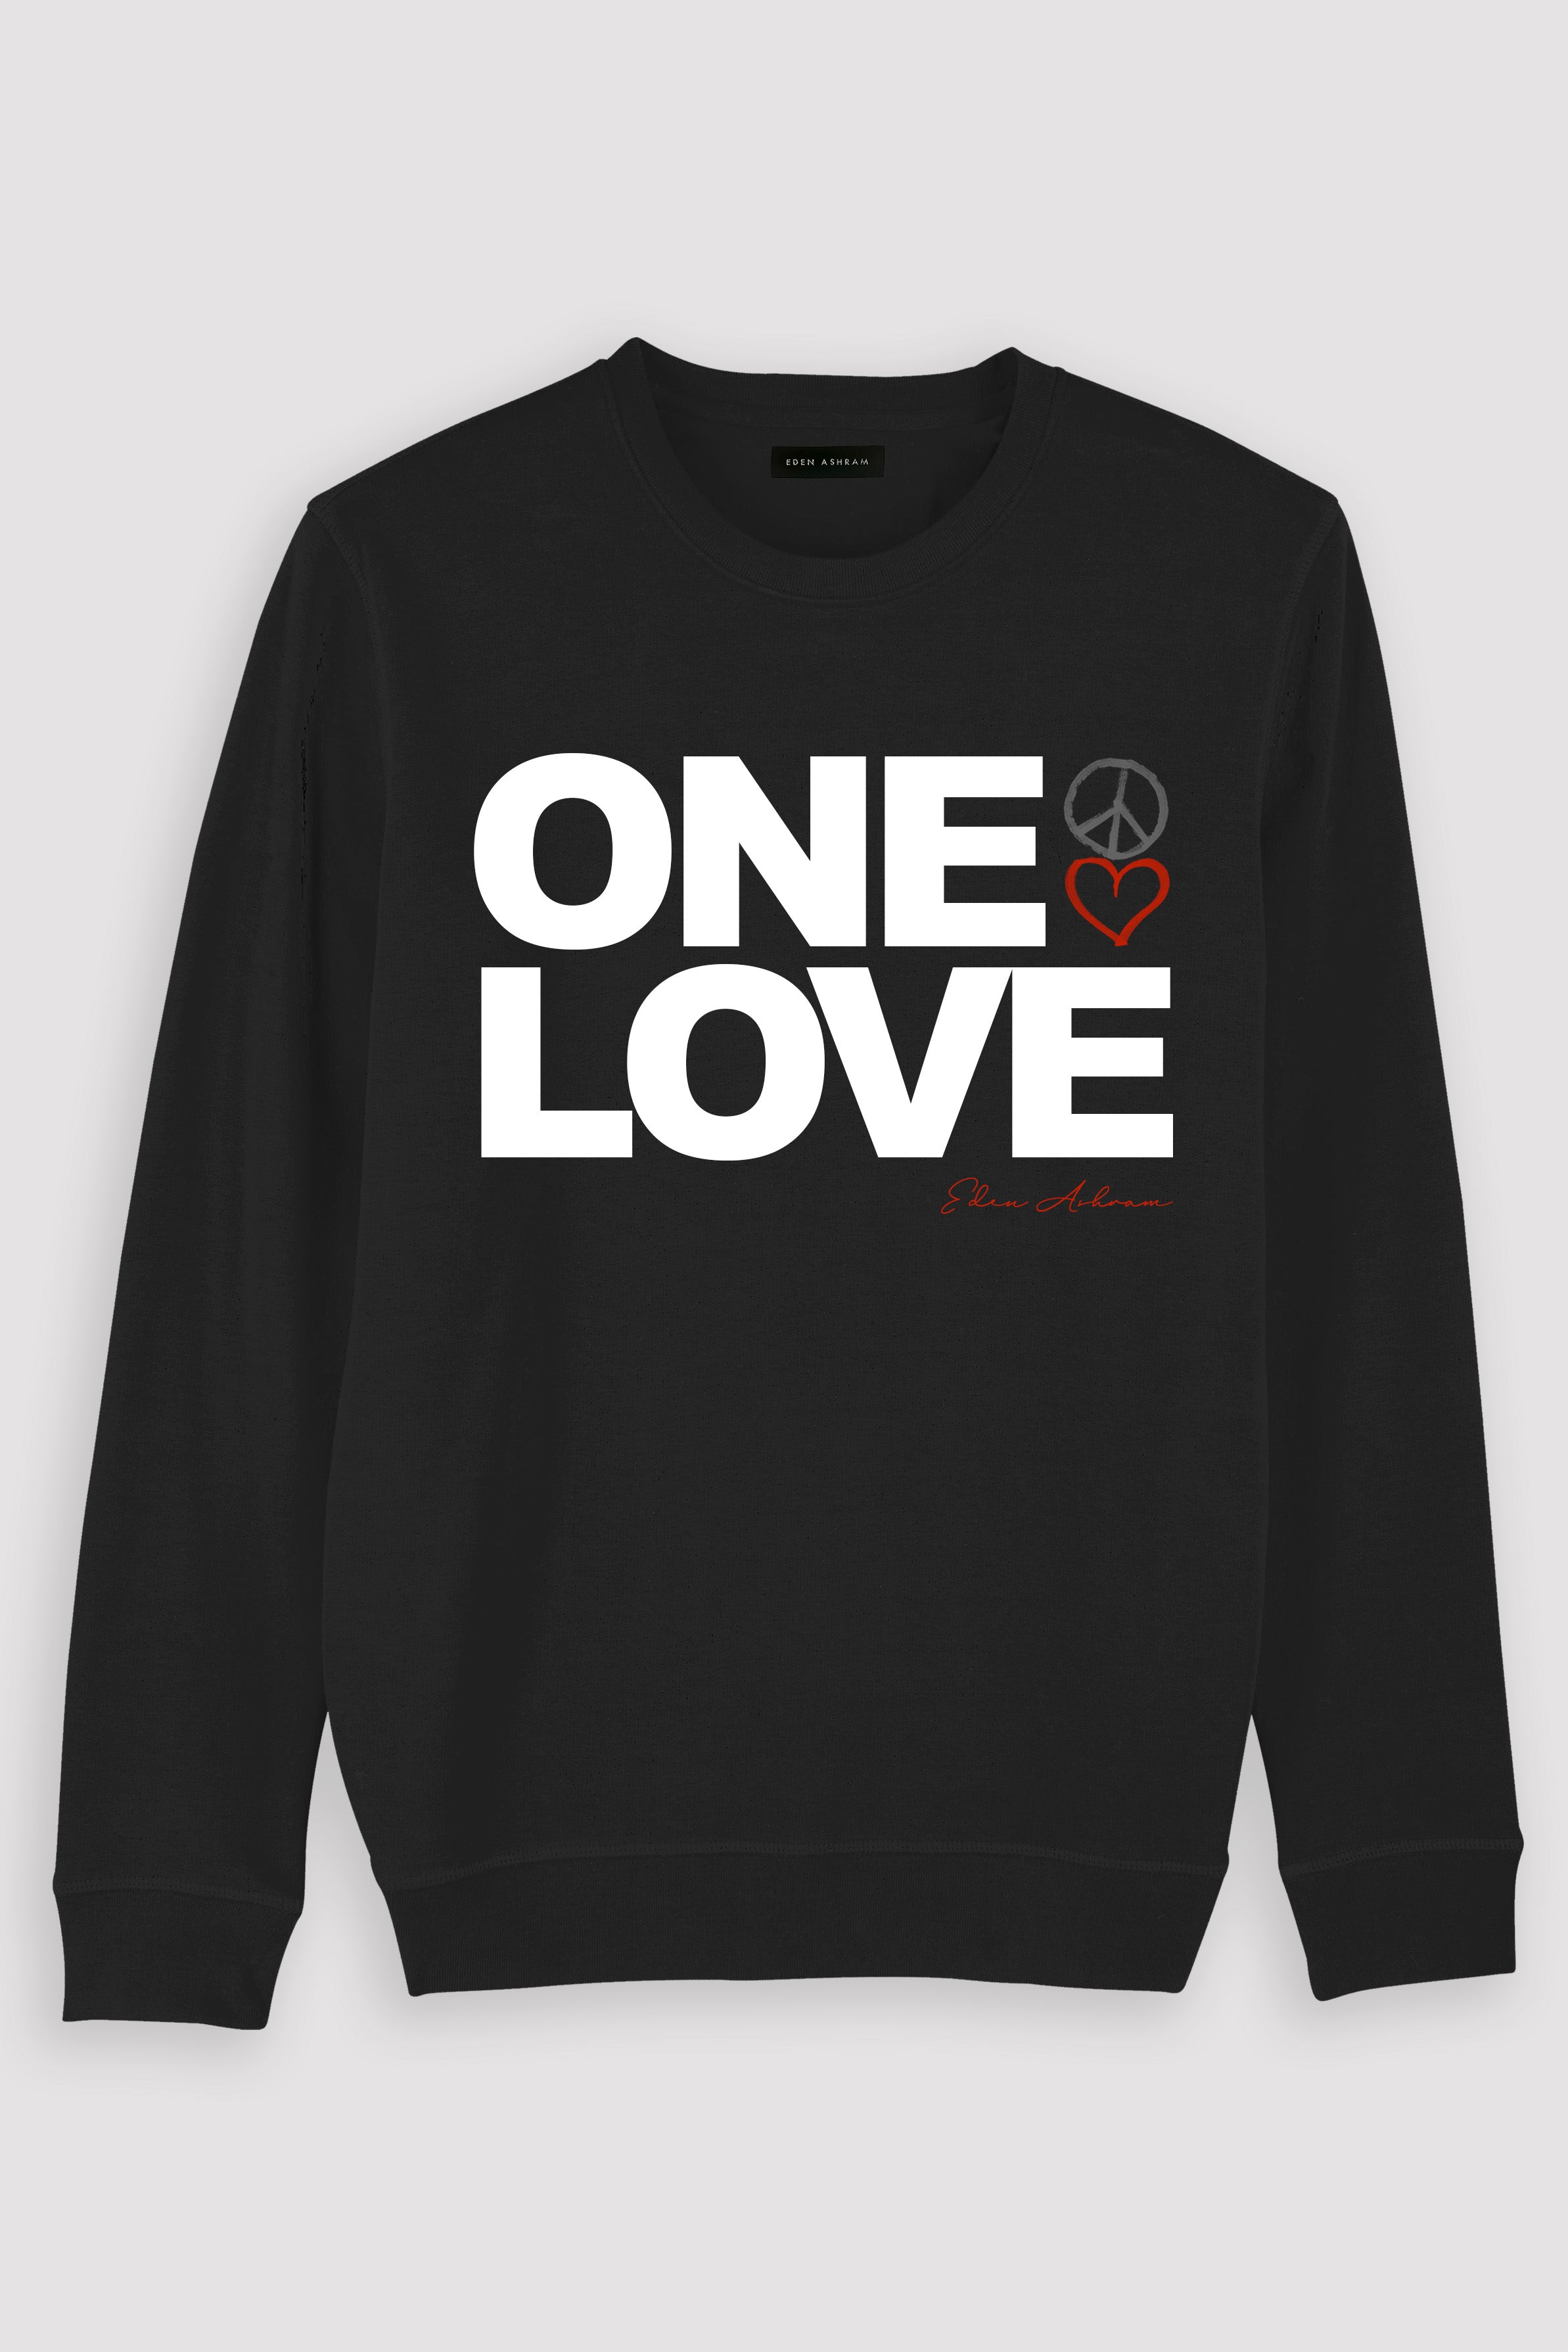 Eden Ashram One Love Premium Crew Neck Sweatshirt Black